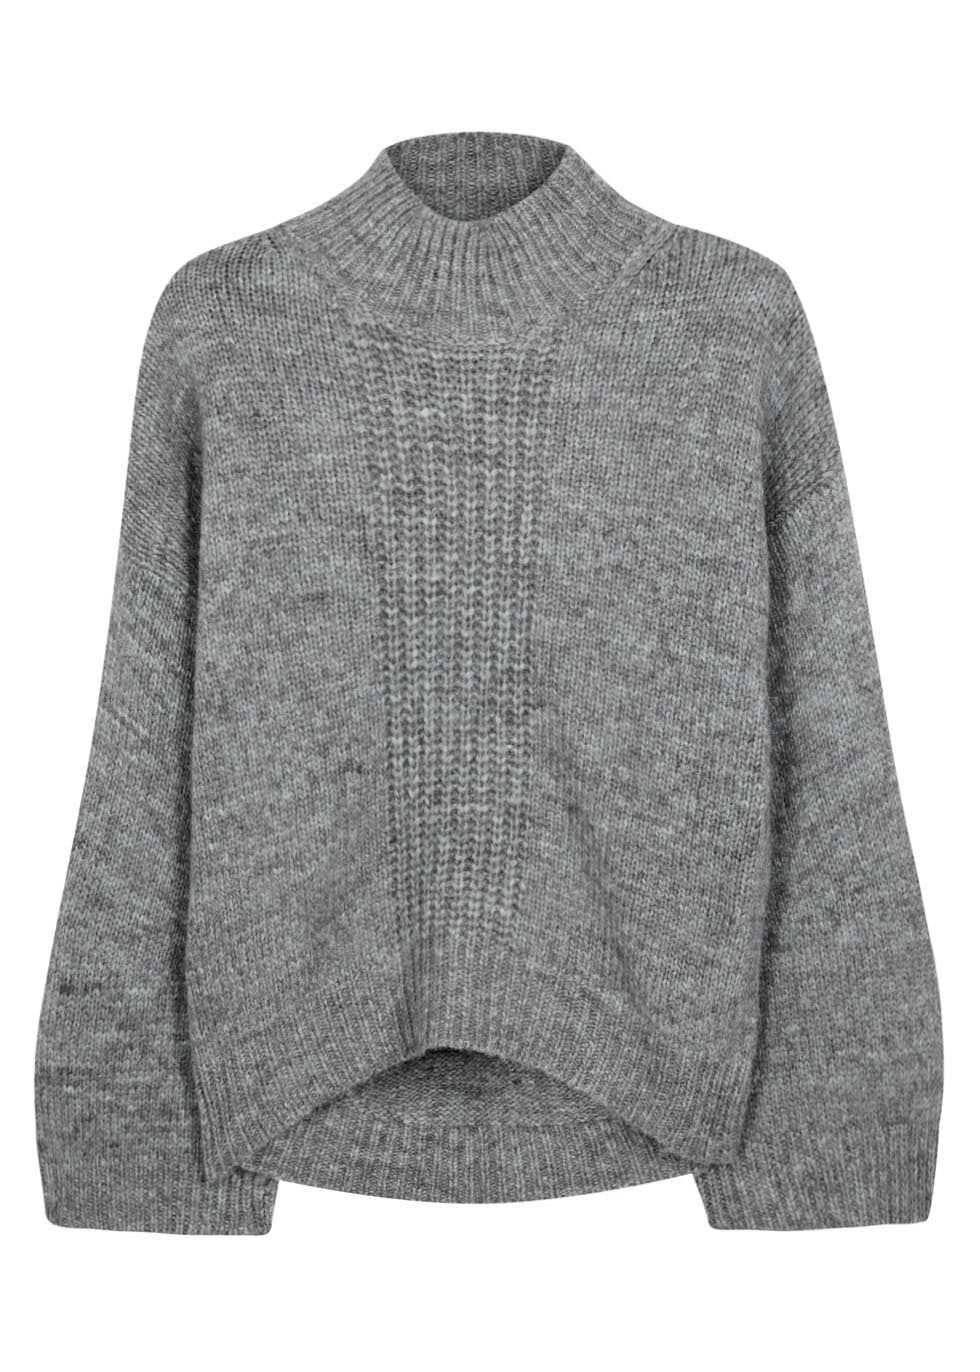 Grey chunky knit alpaca blend jumper